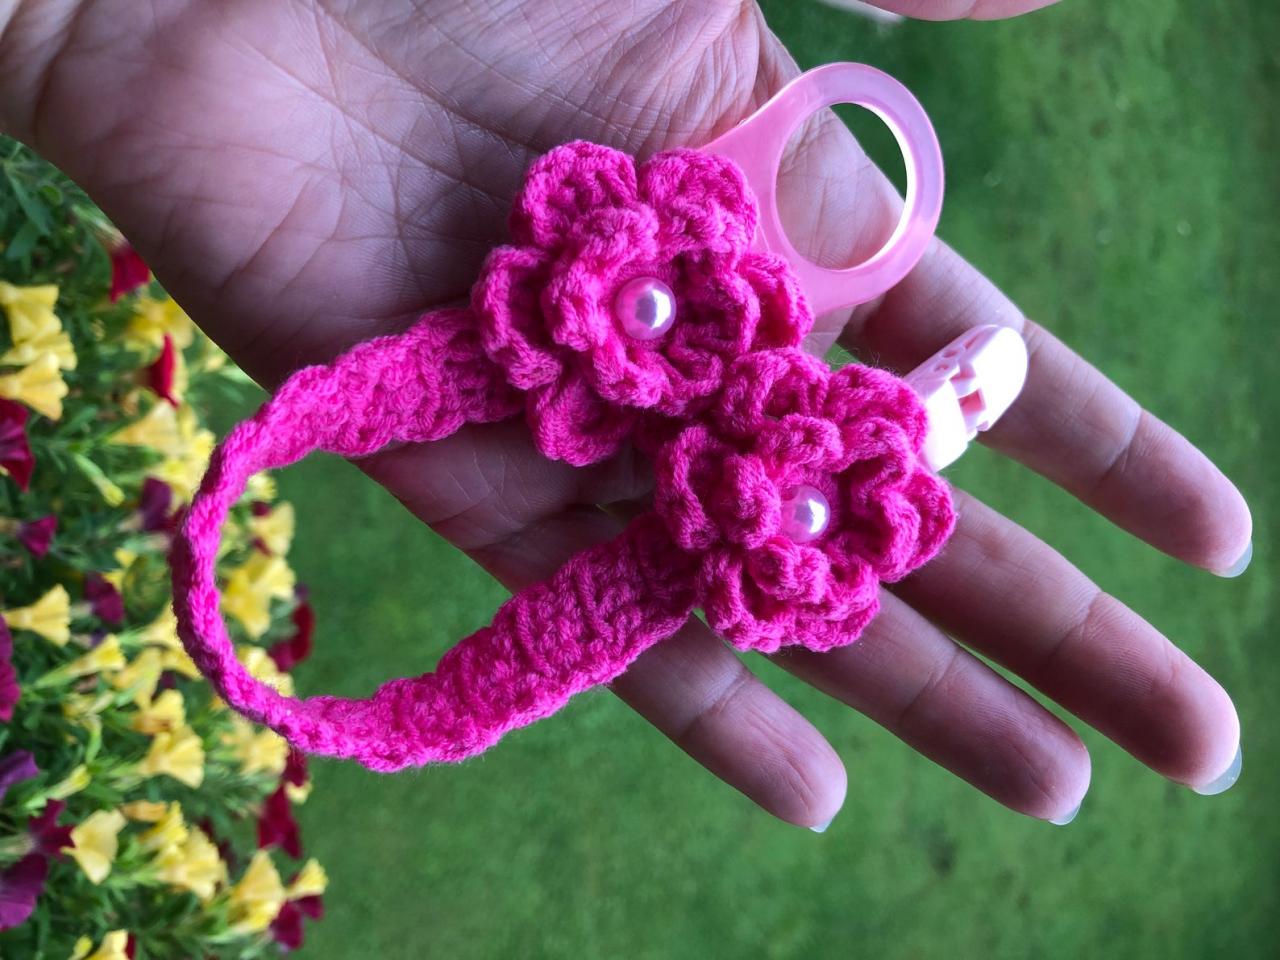 Pacifier Holder - Crochet Pacifier Holder - Baby Pacifier Holder - Pink